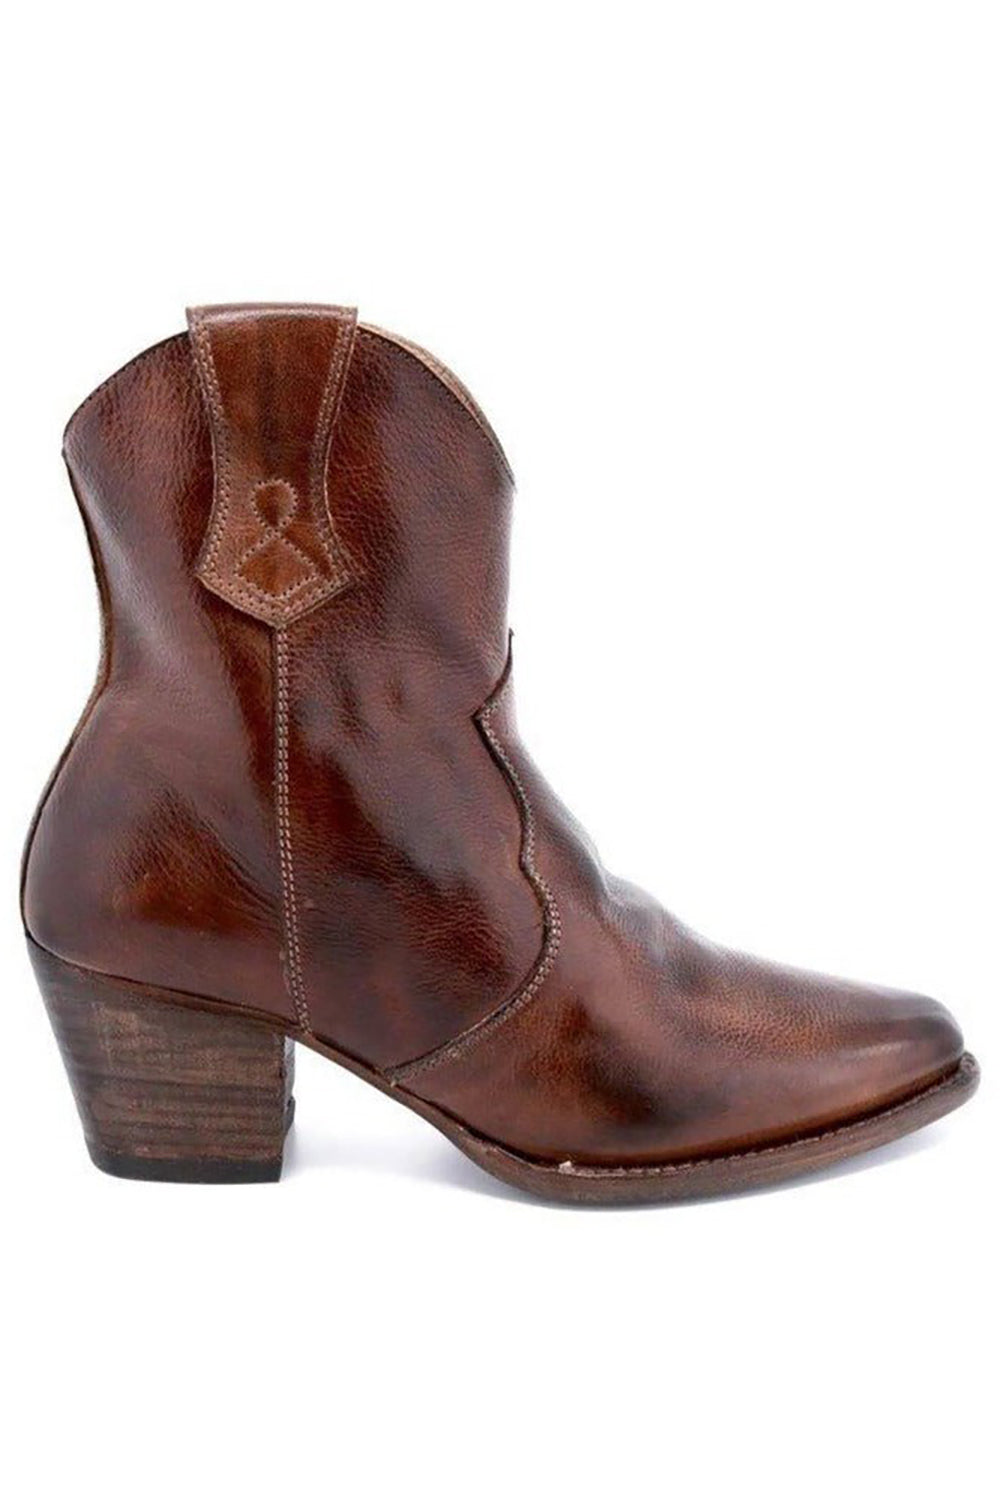 Brown PU Leather Chunky Steels Boho Wedding Boots